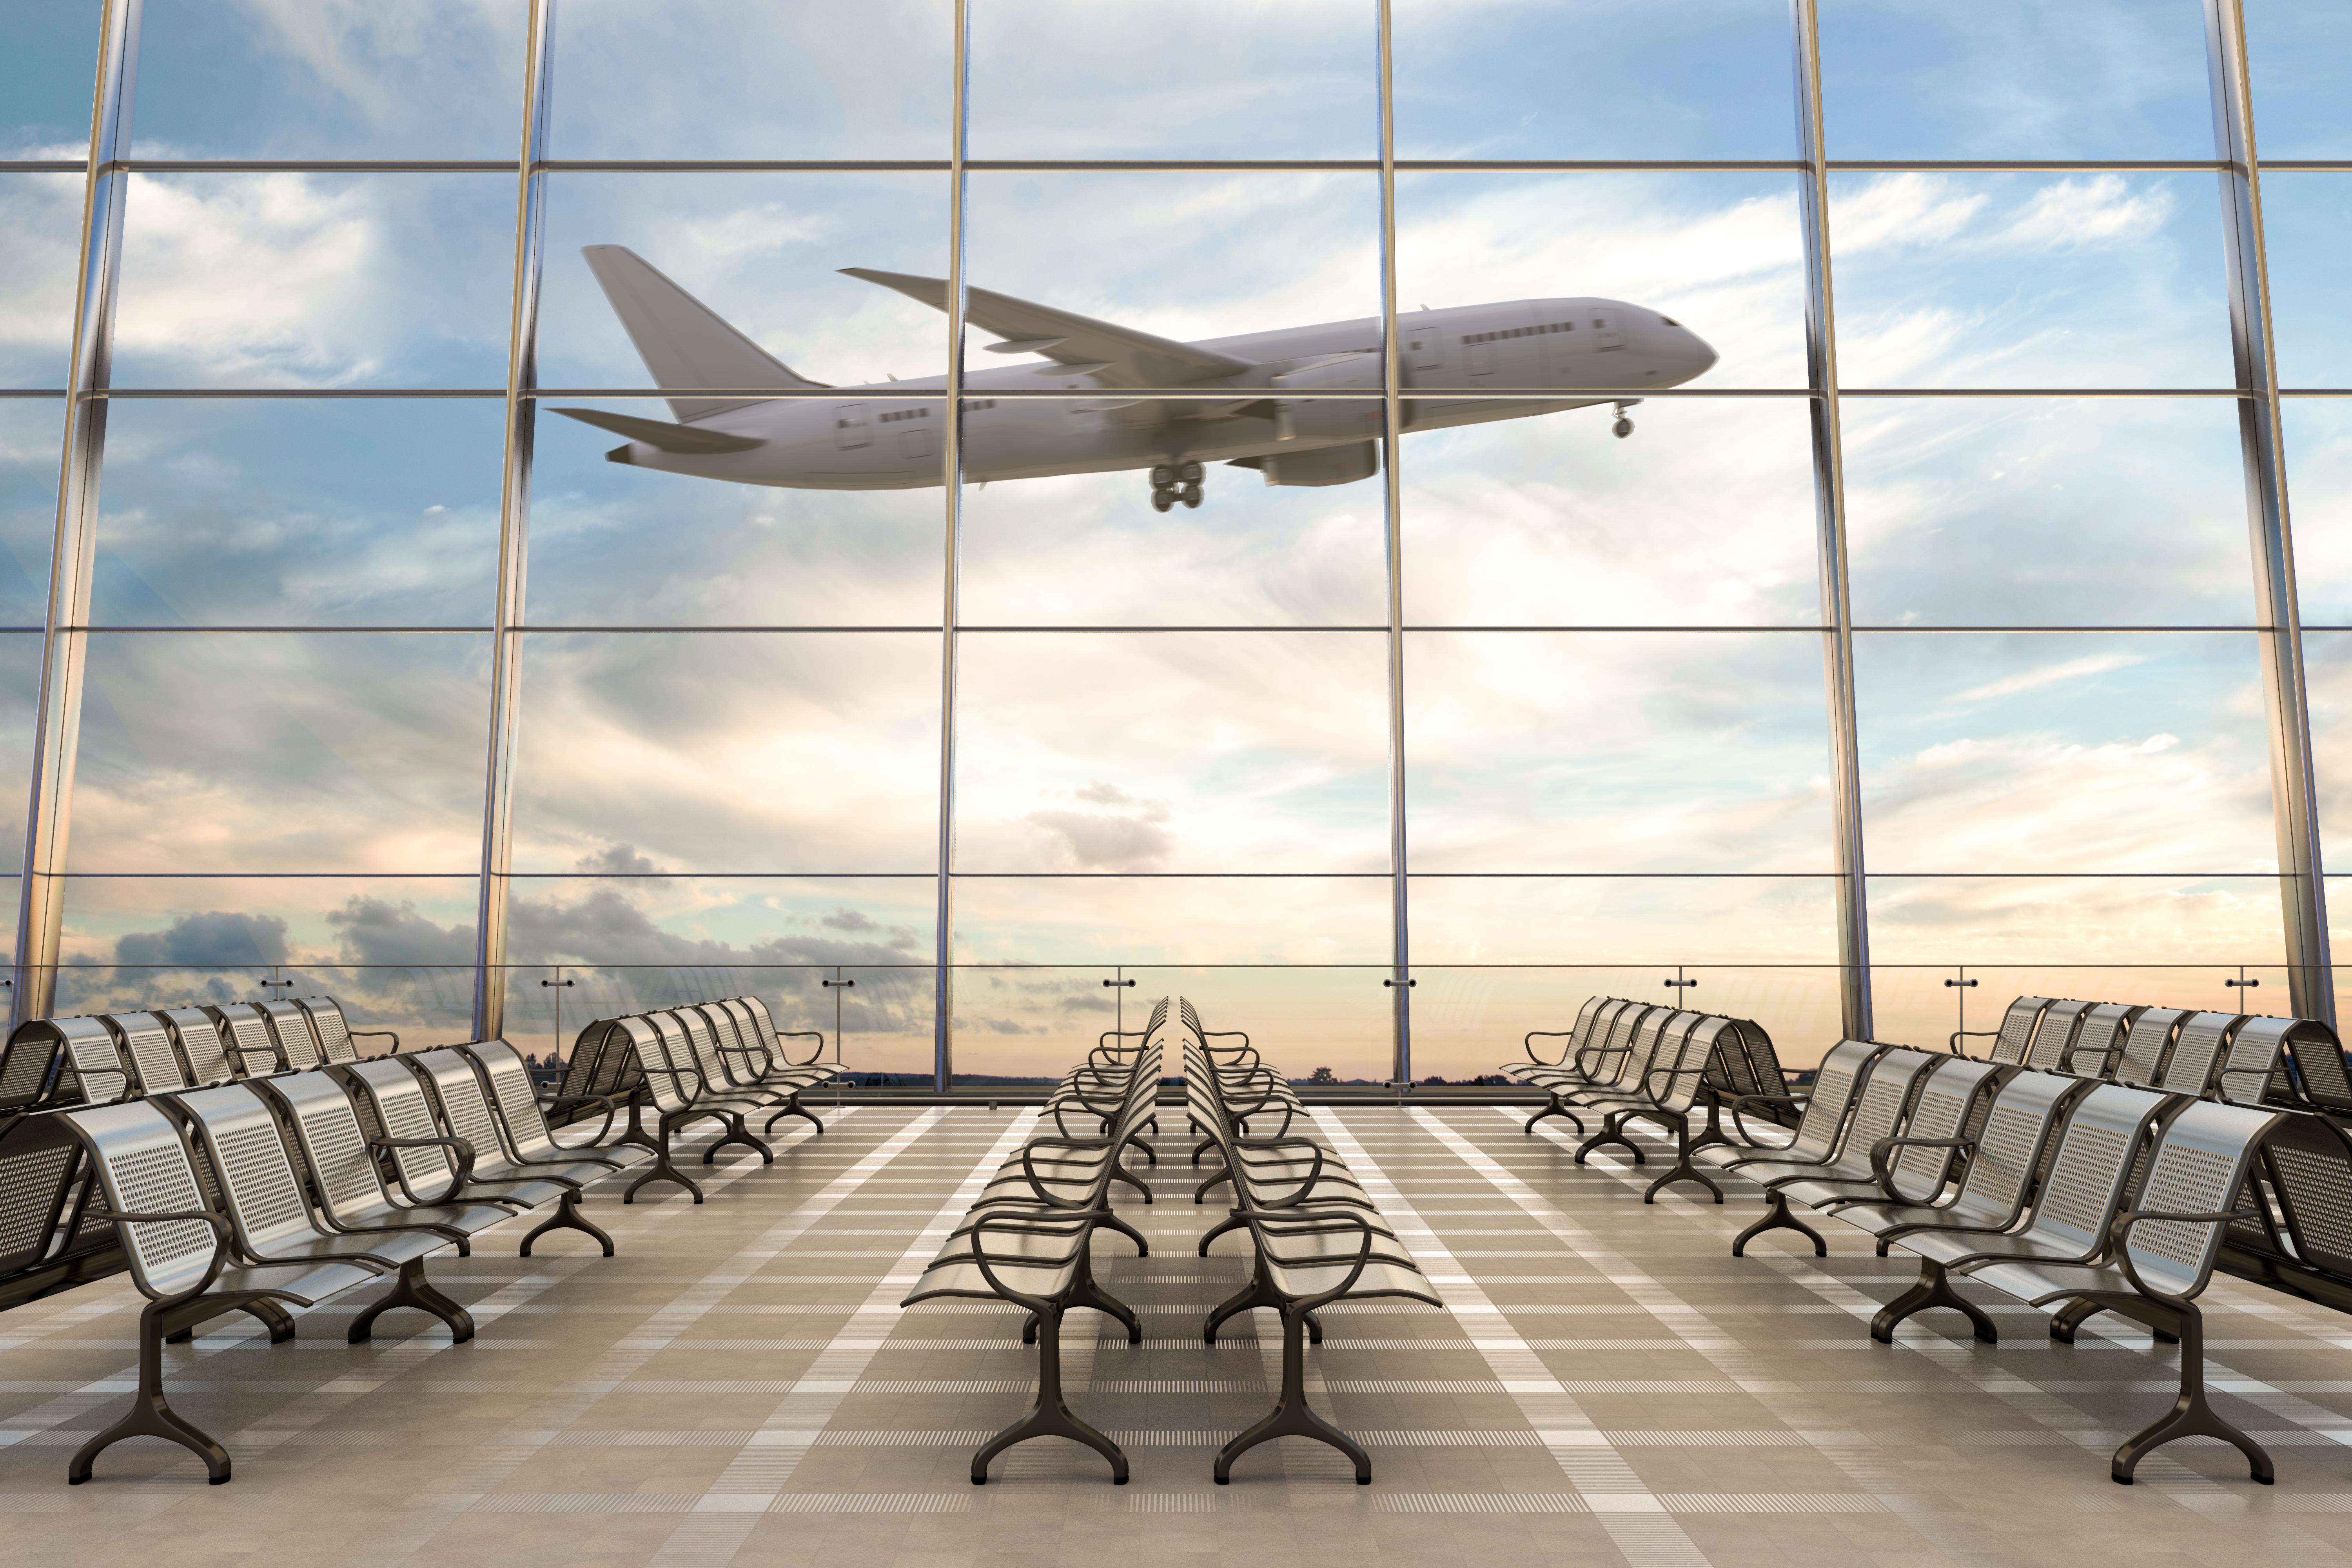 A plane taking off as seen through an airport window | Source: Shutterstock